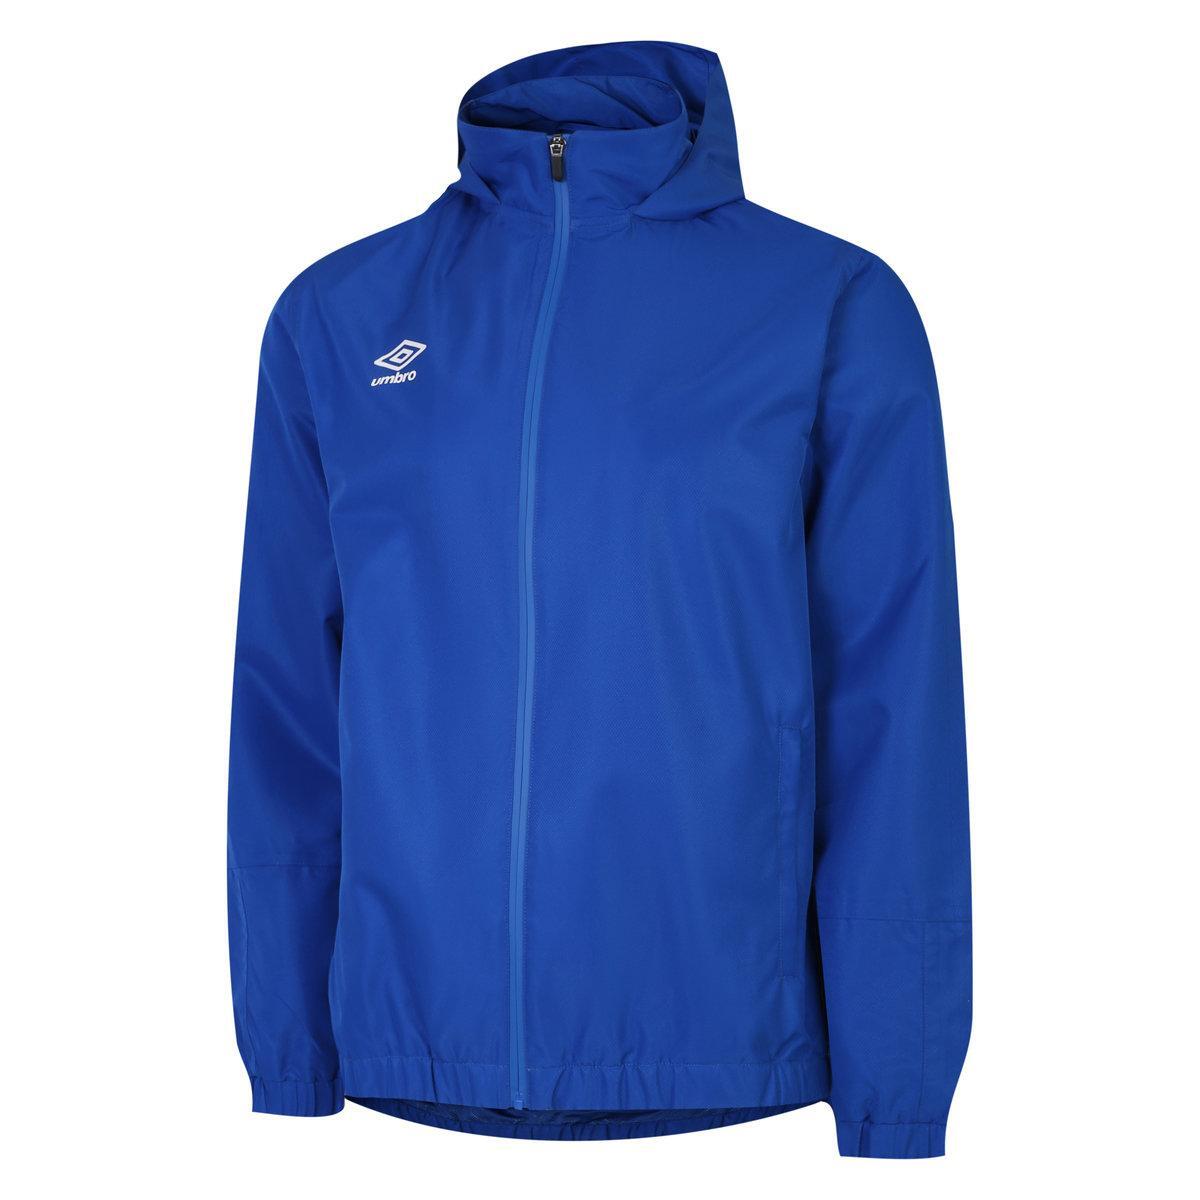 Mens Total Training Waterproof Jacket (Royal Blue/White) 1/1